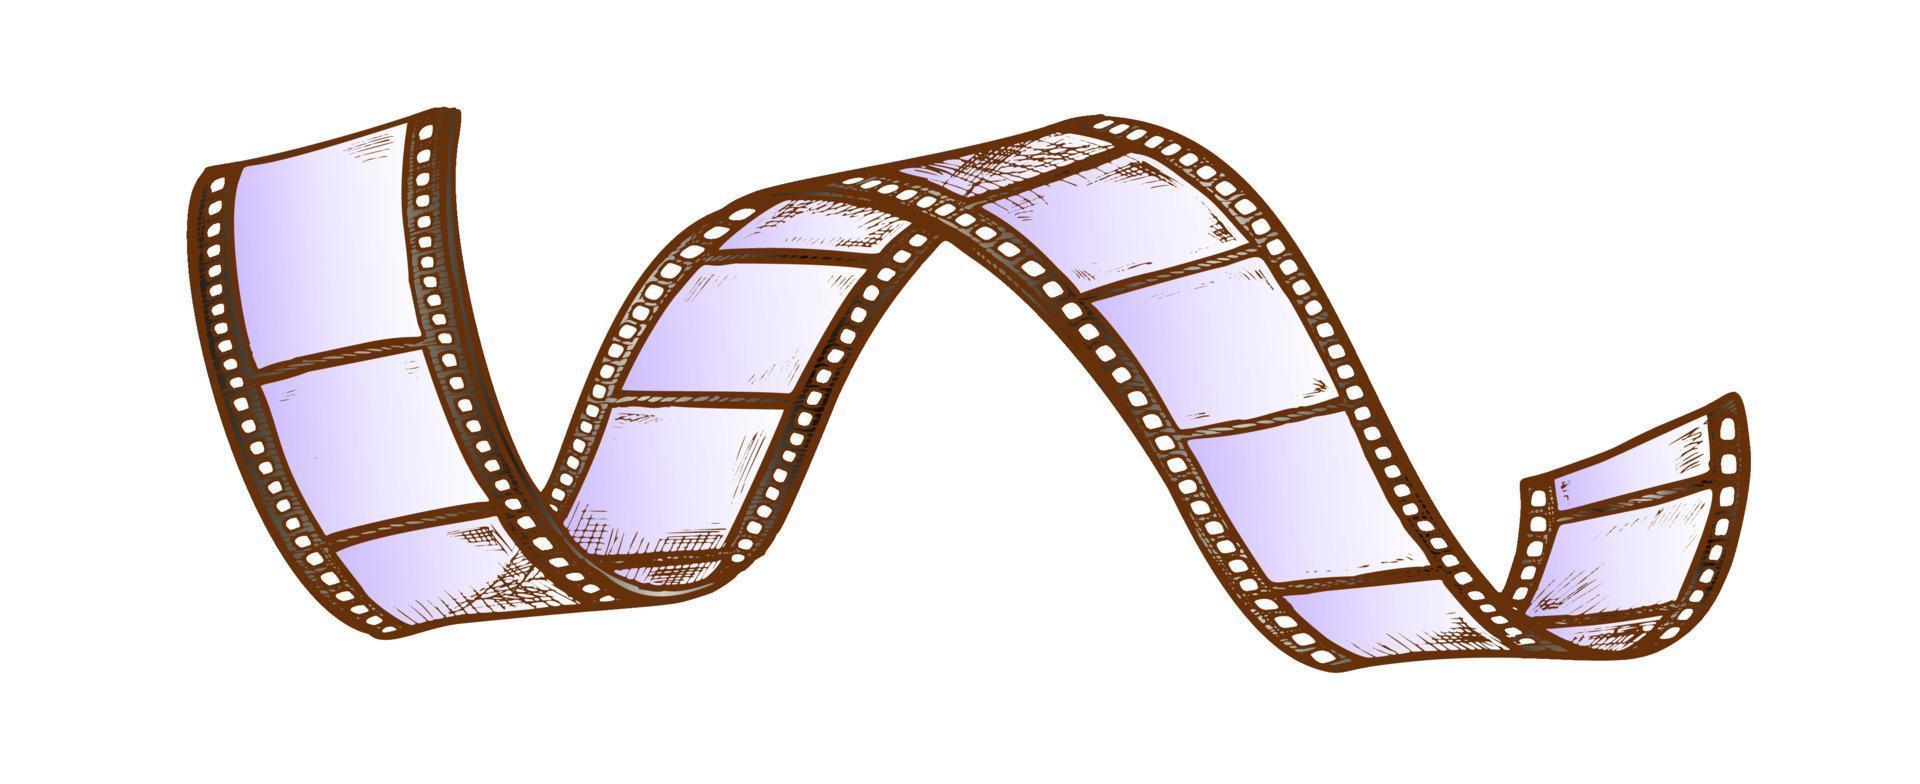 Filmstreifen für Kinoprojektor-Farbvektor vektor